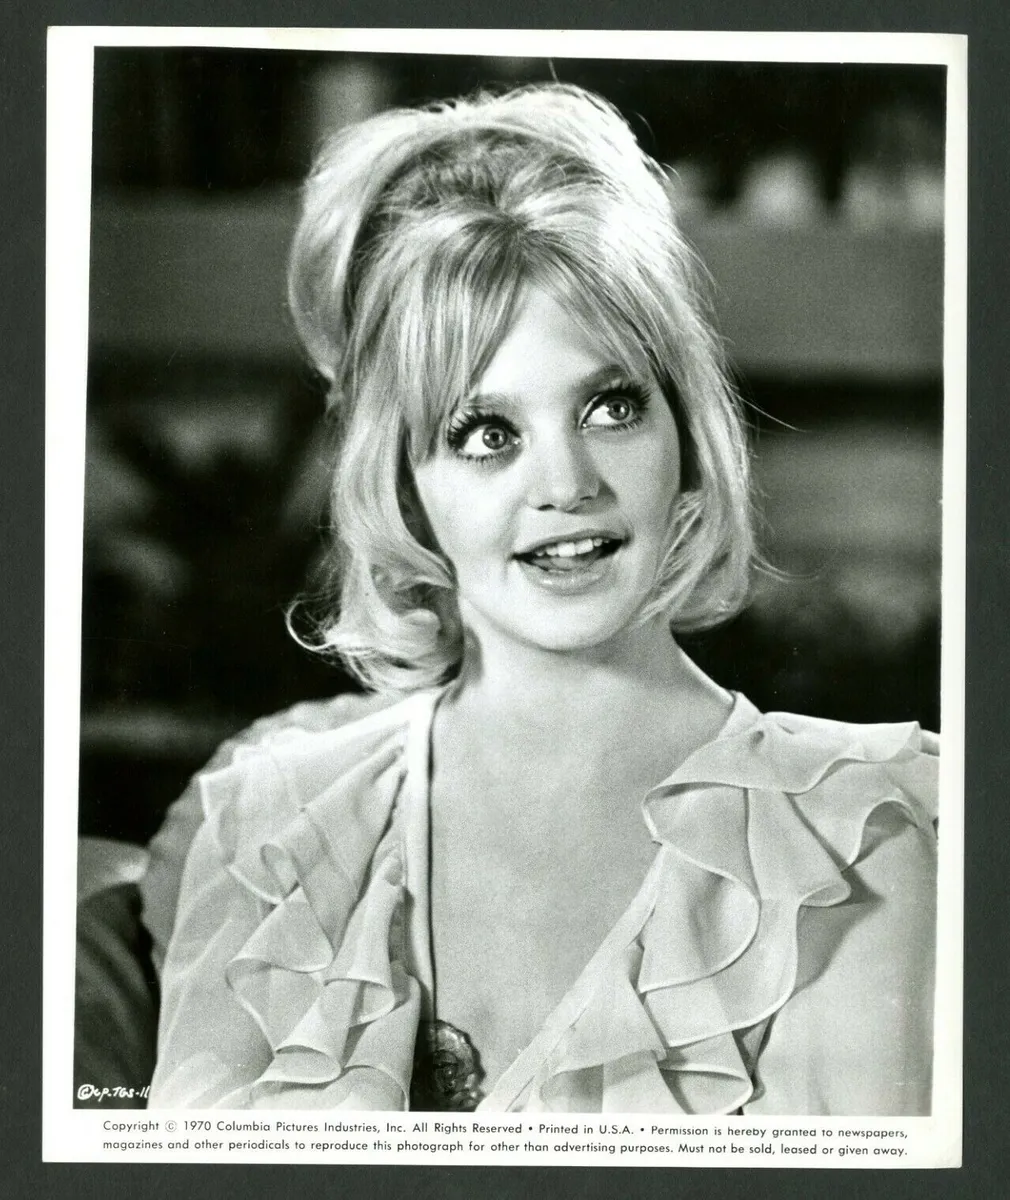 Goldie Hawn is not dead